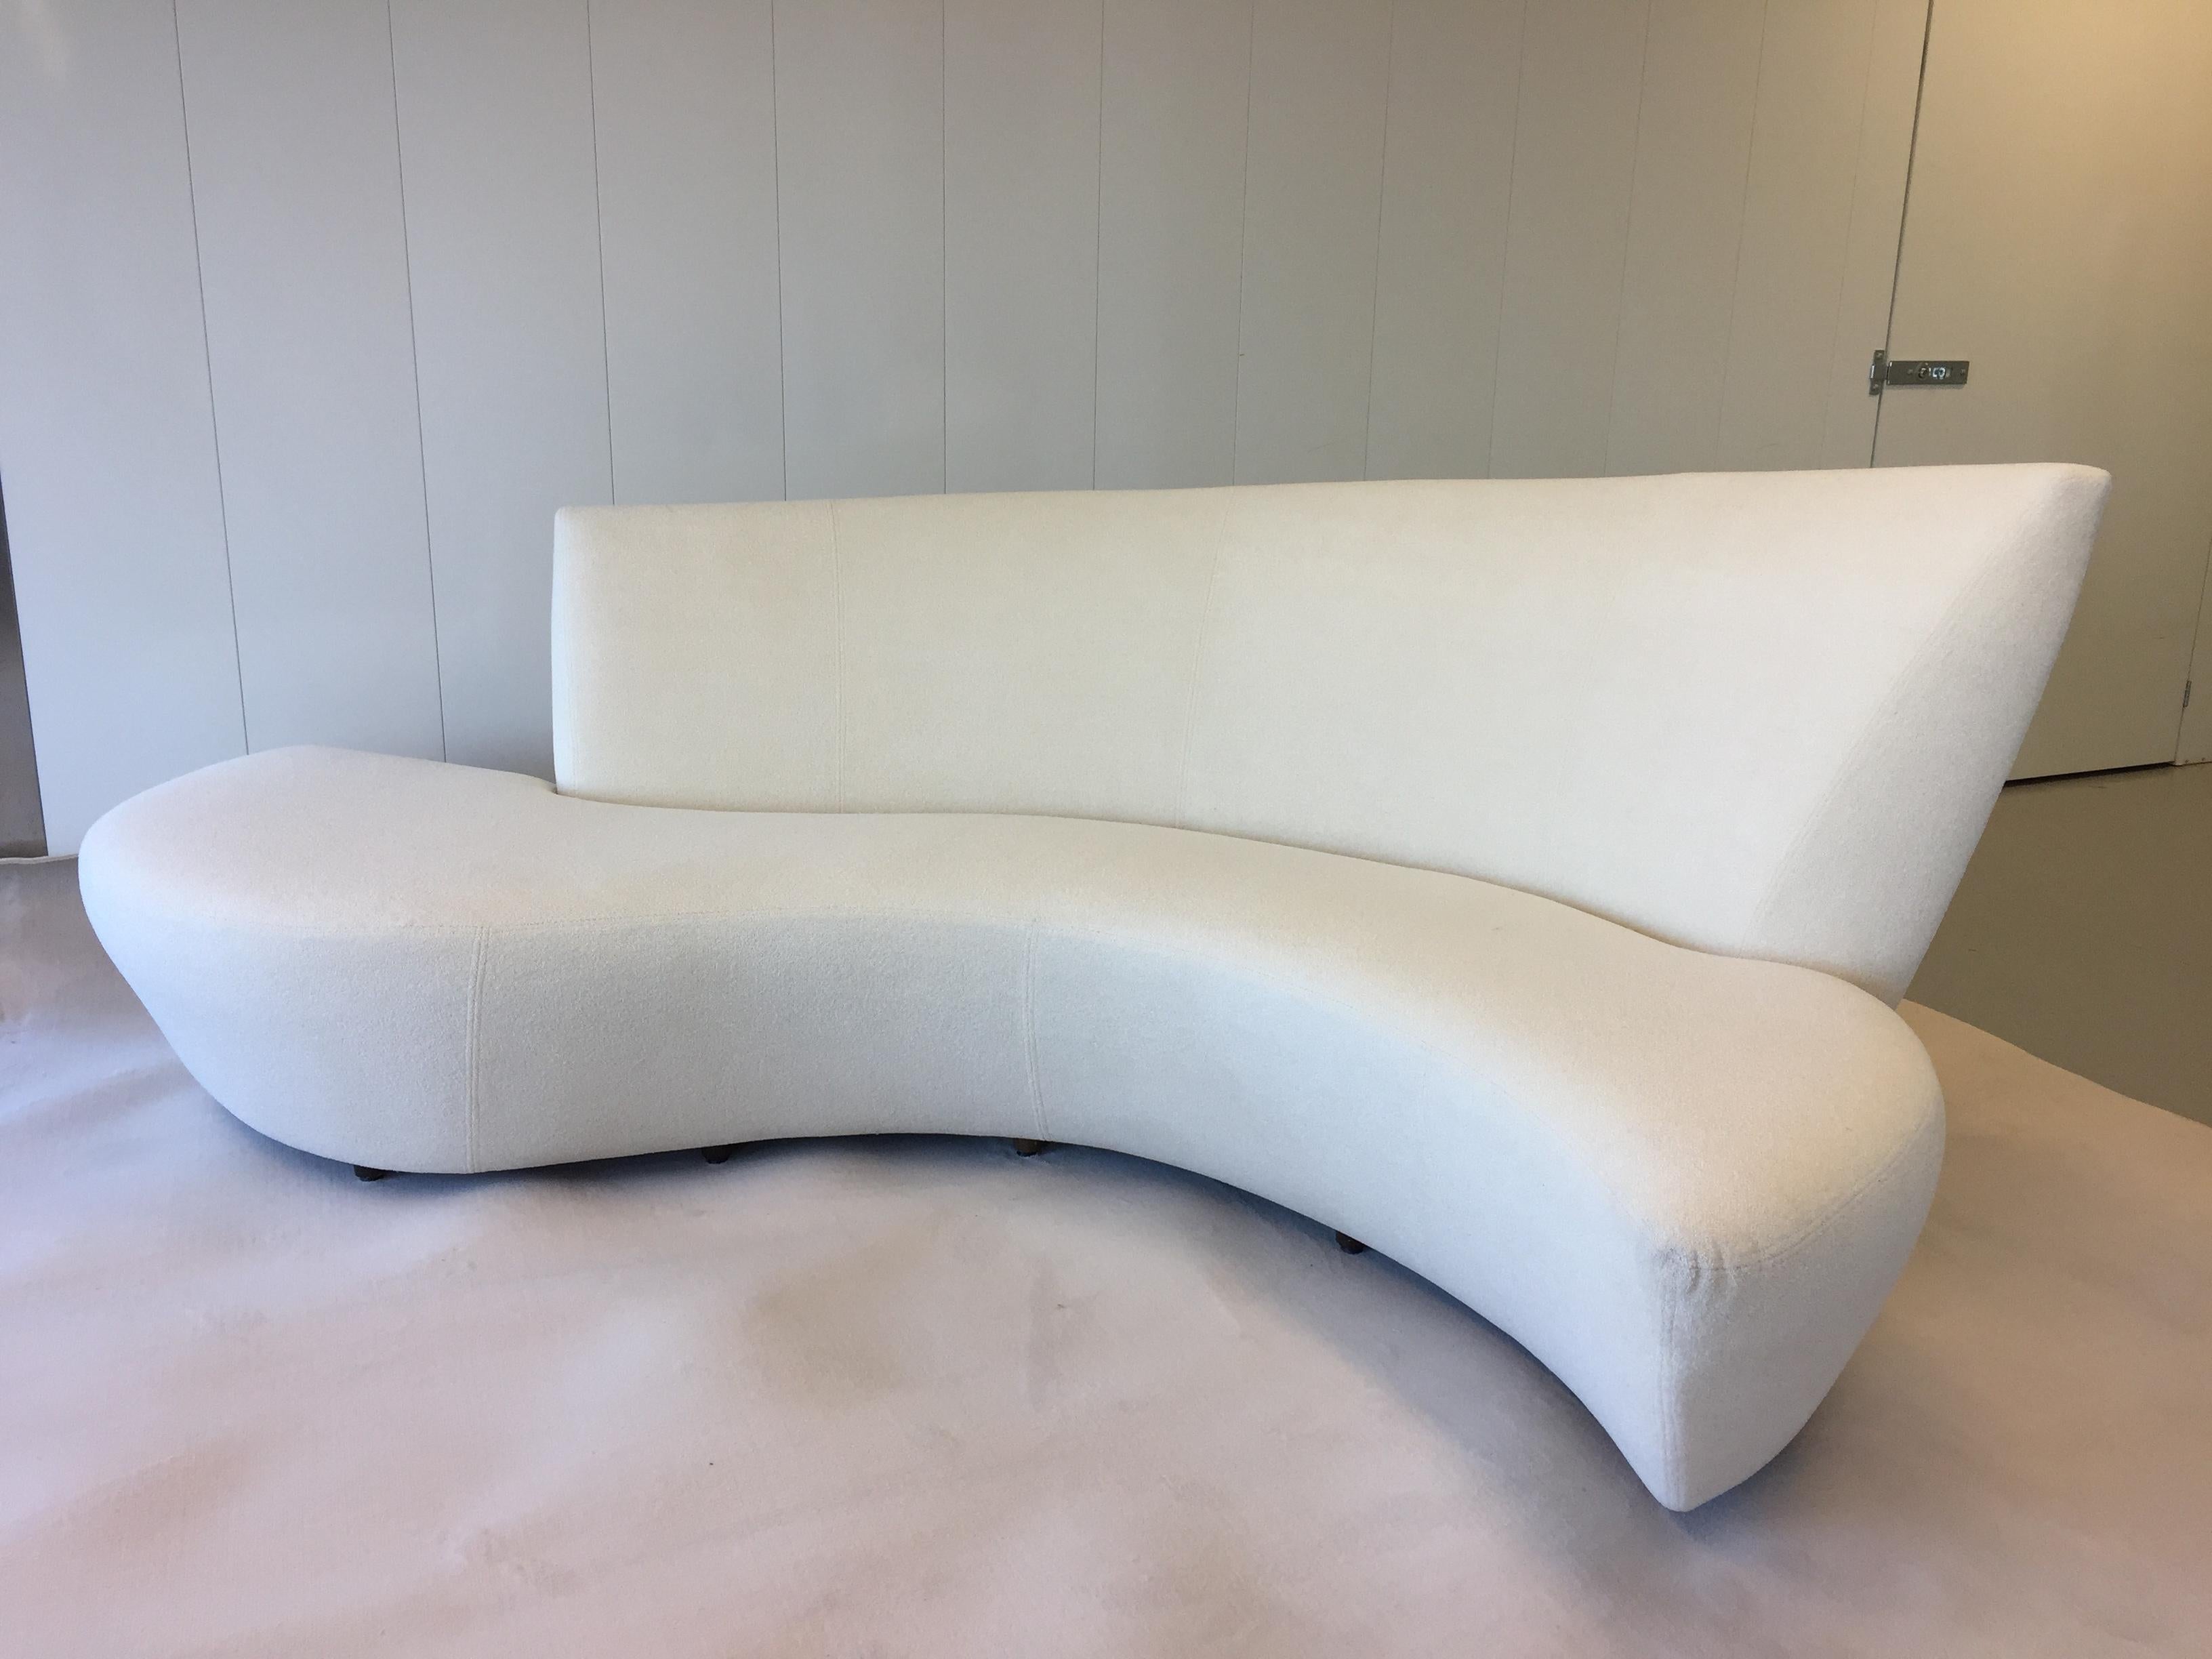 Vladimir Kagan Balboa sofa, upholster in a off white terrycloth Chenille fabric.